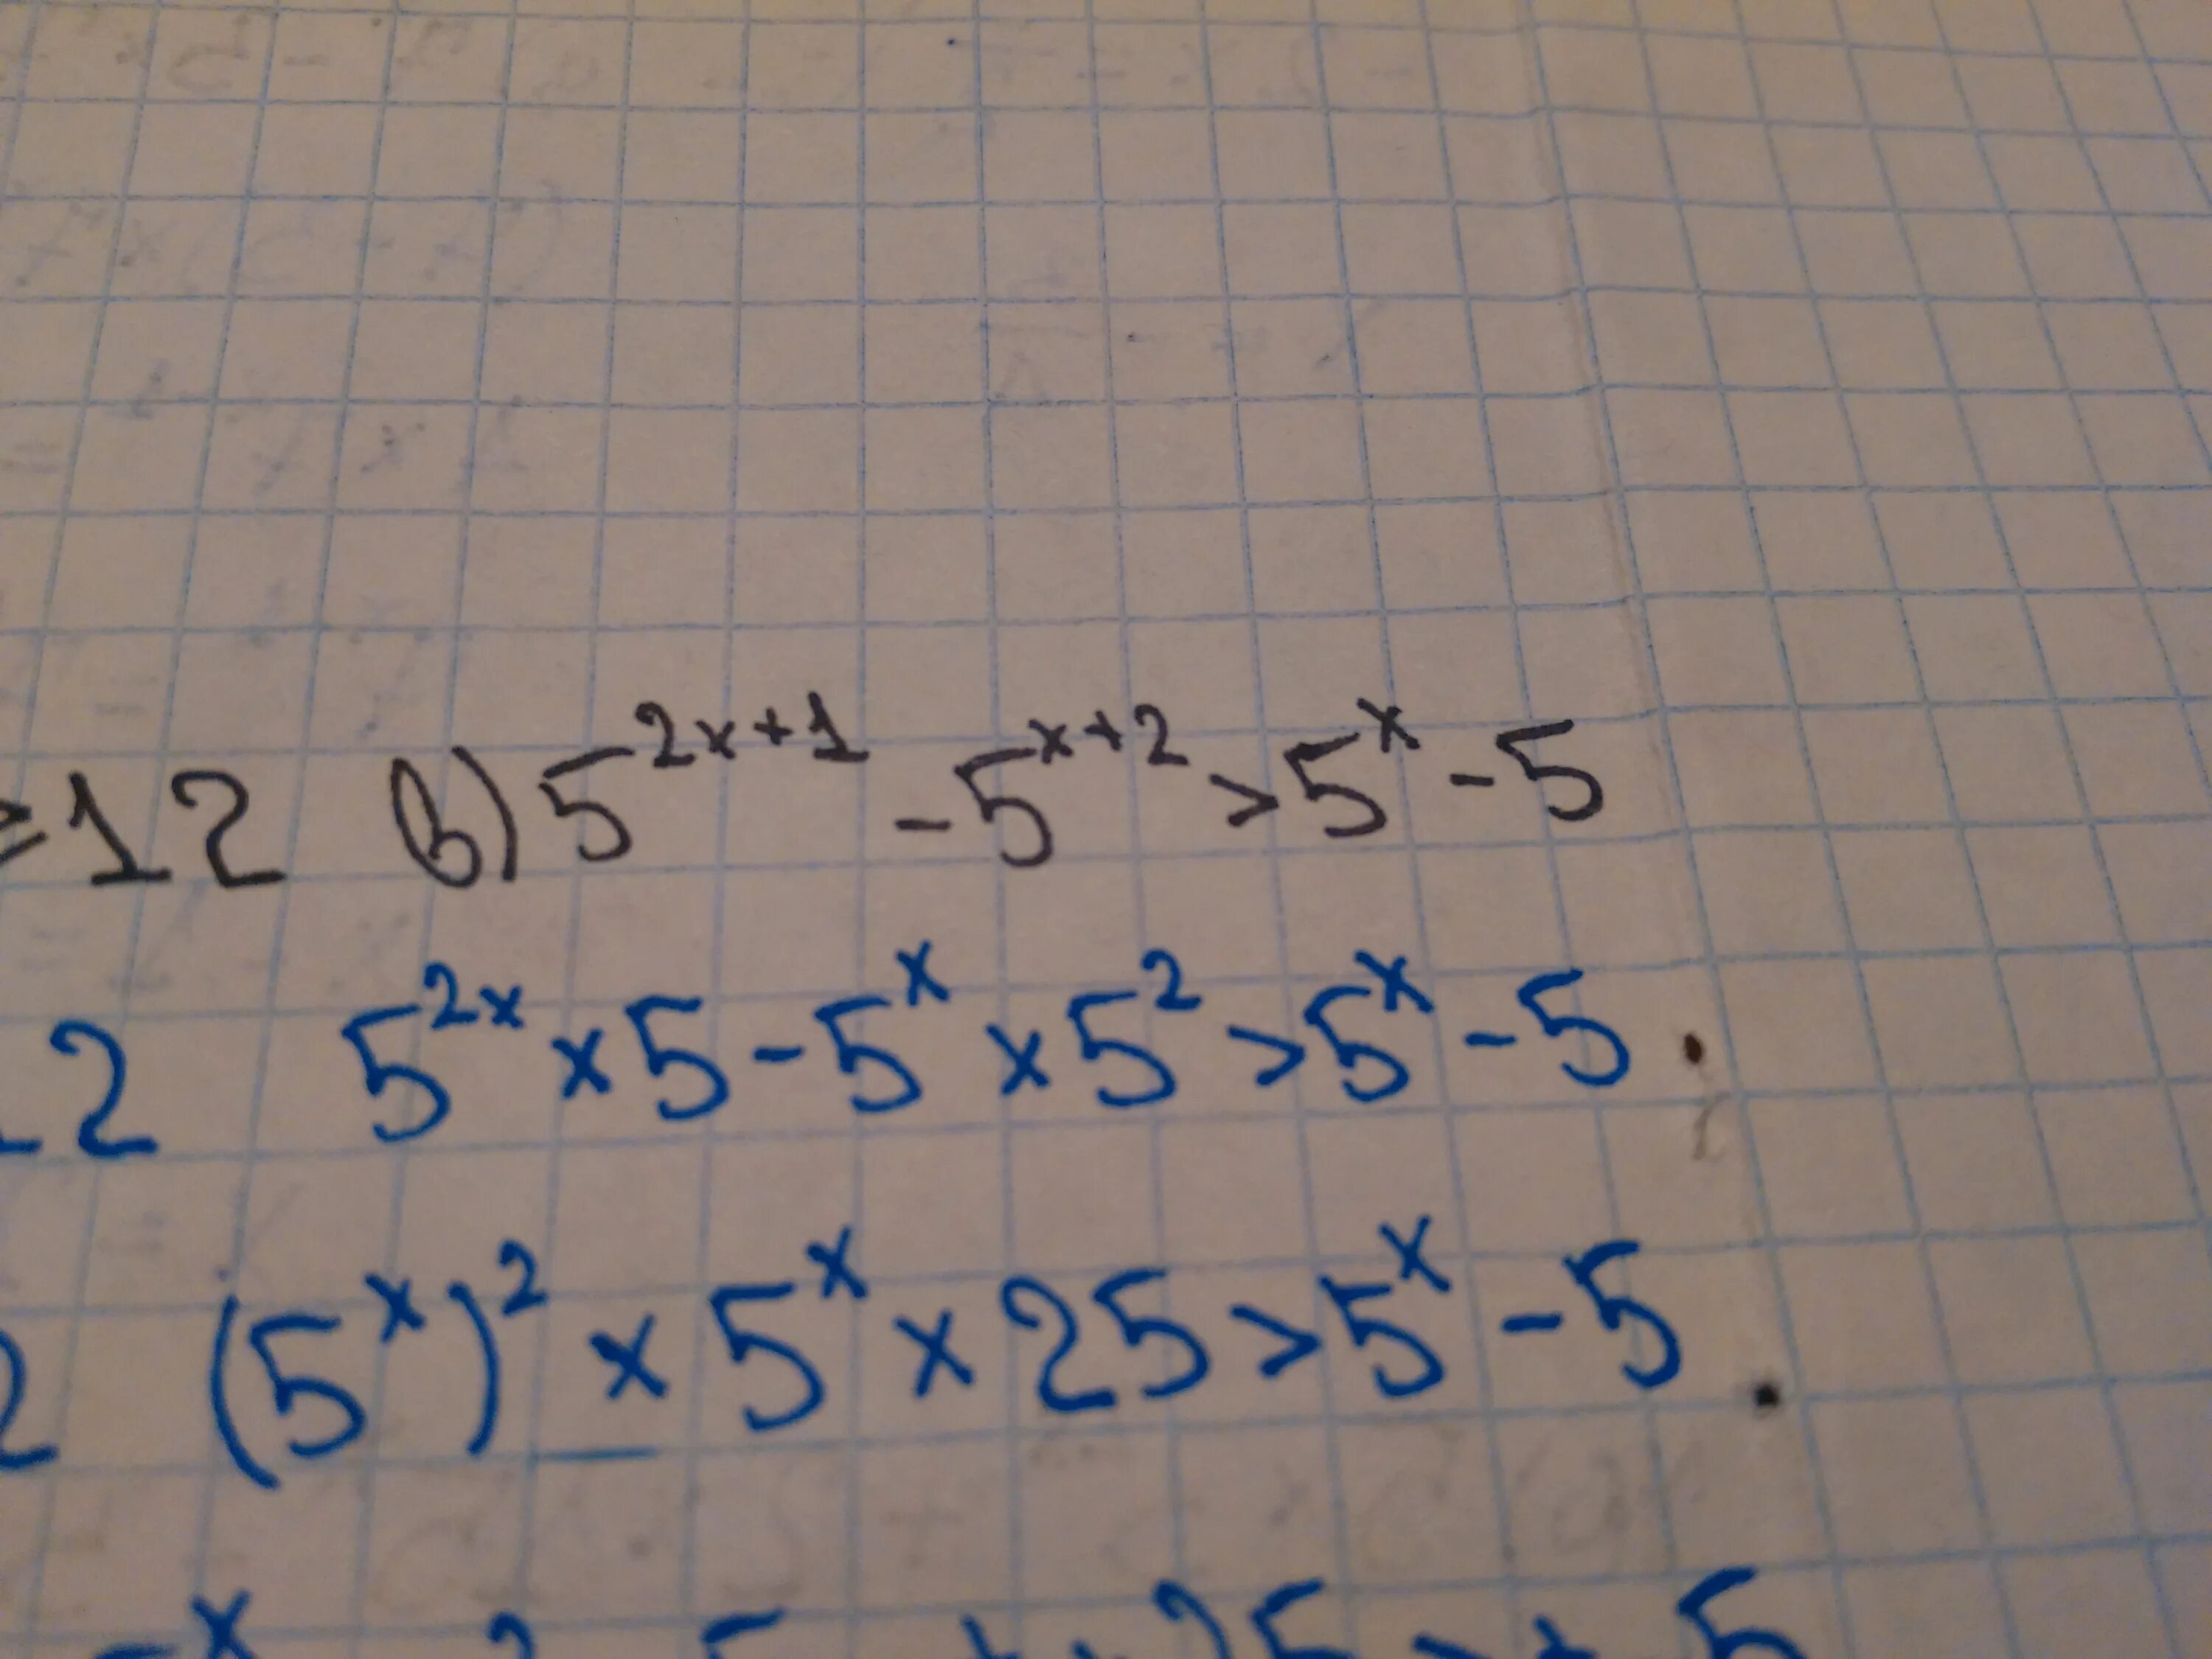 5x 2 5. 2x-1/5-x+1/2=1. 5 X 2 −X + 2 1 X = − 5 X. (X-5)^2. 5x-2=1.